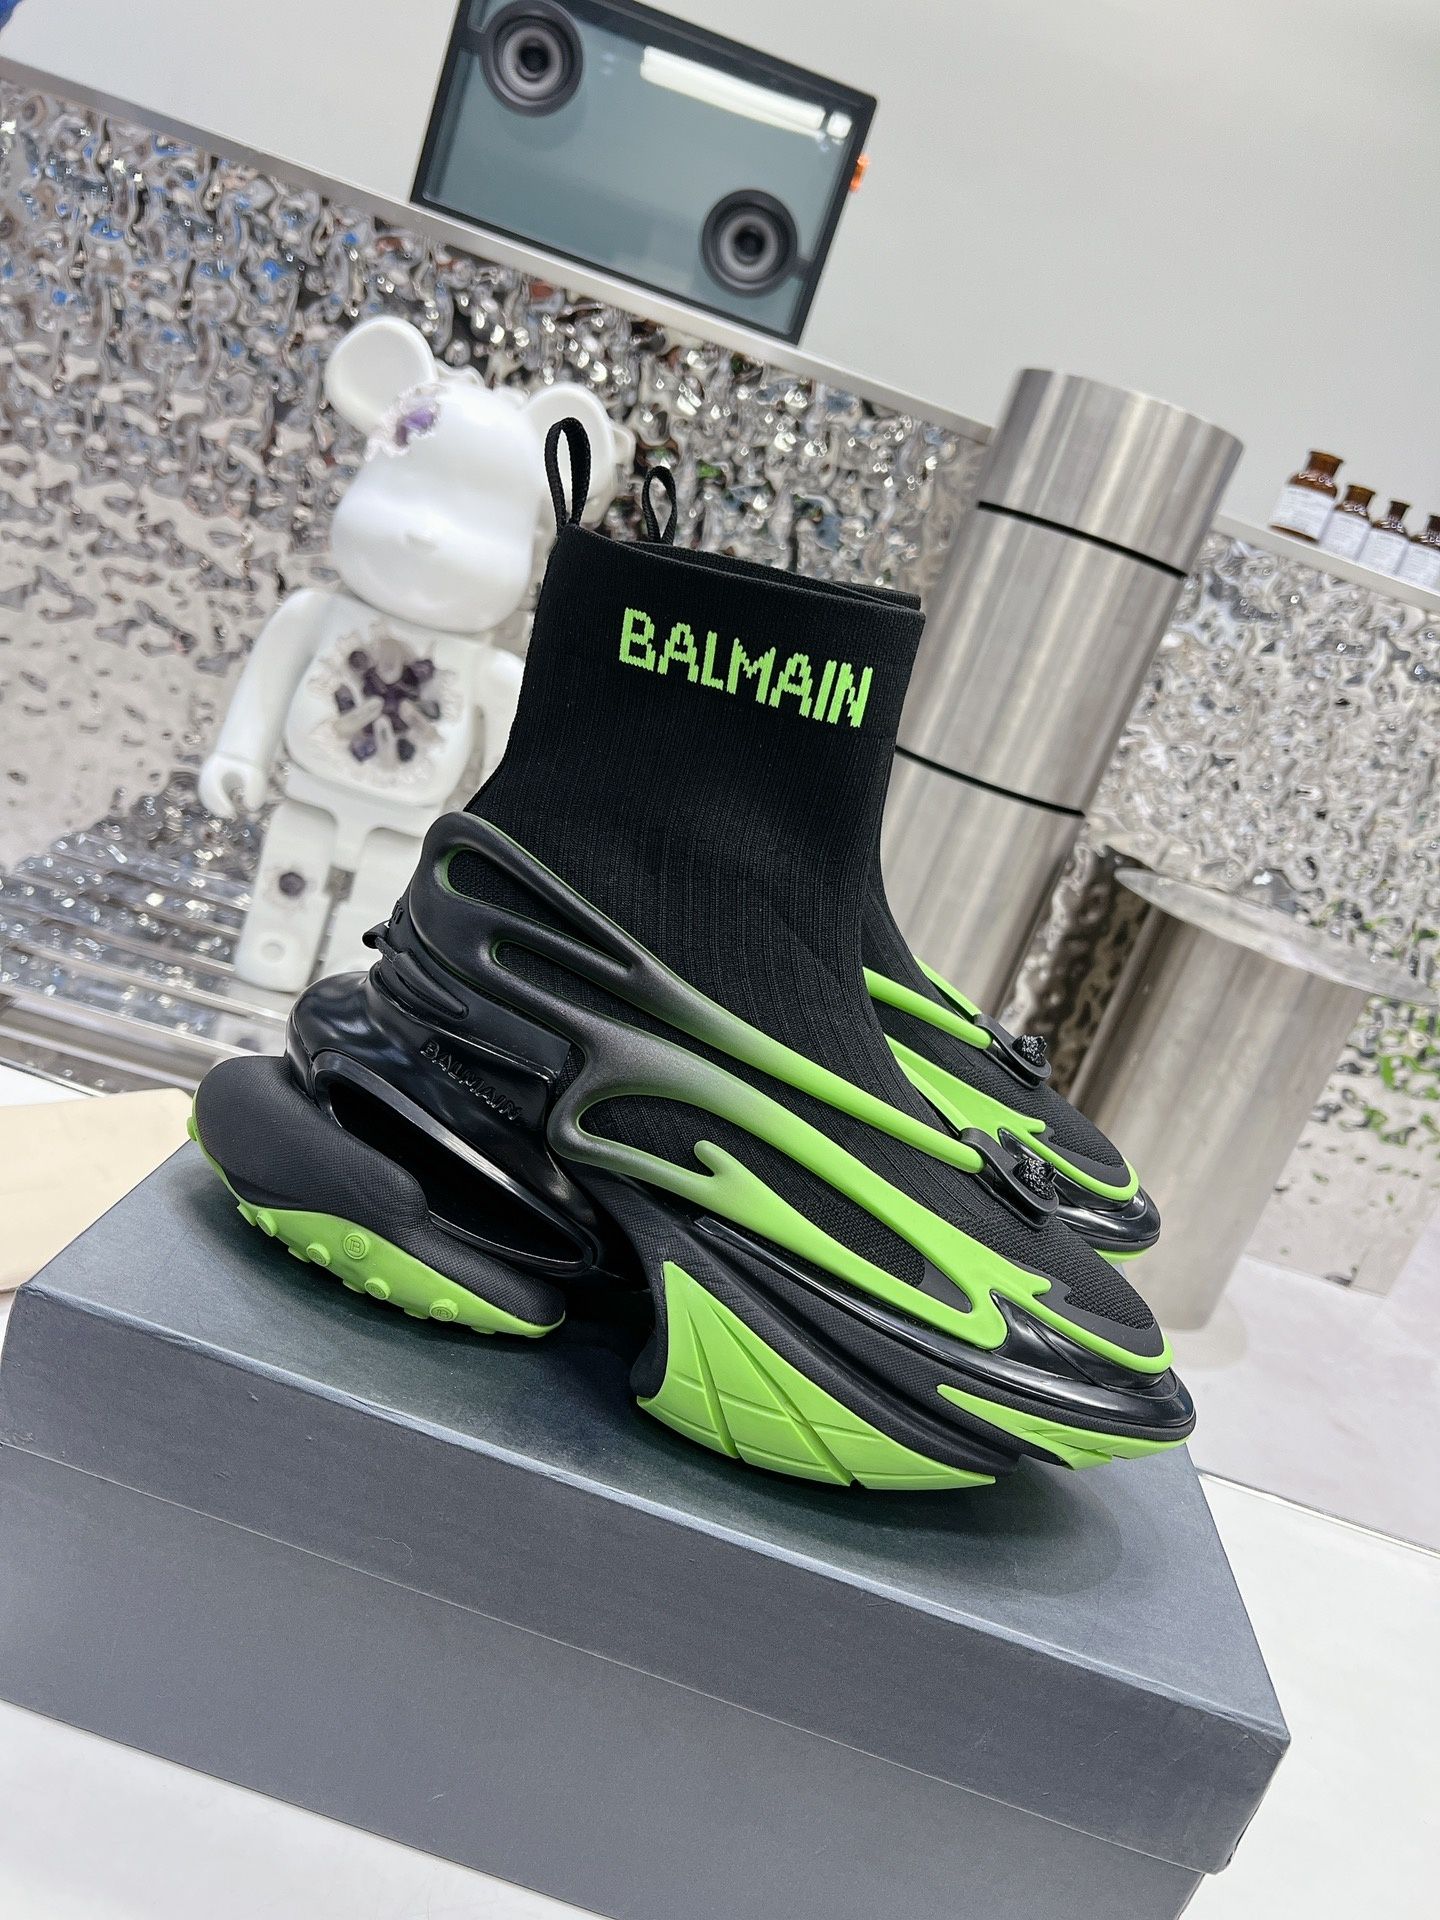 Lux designerskie sneakersy od Balmain